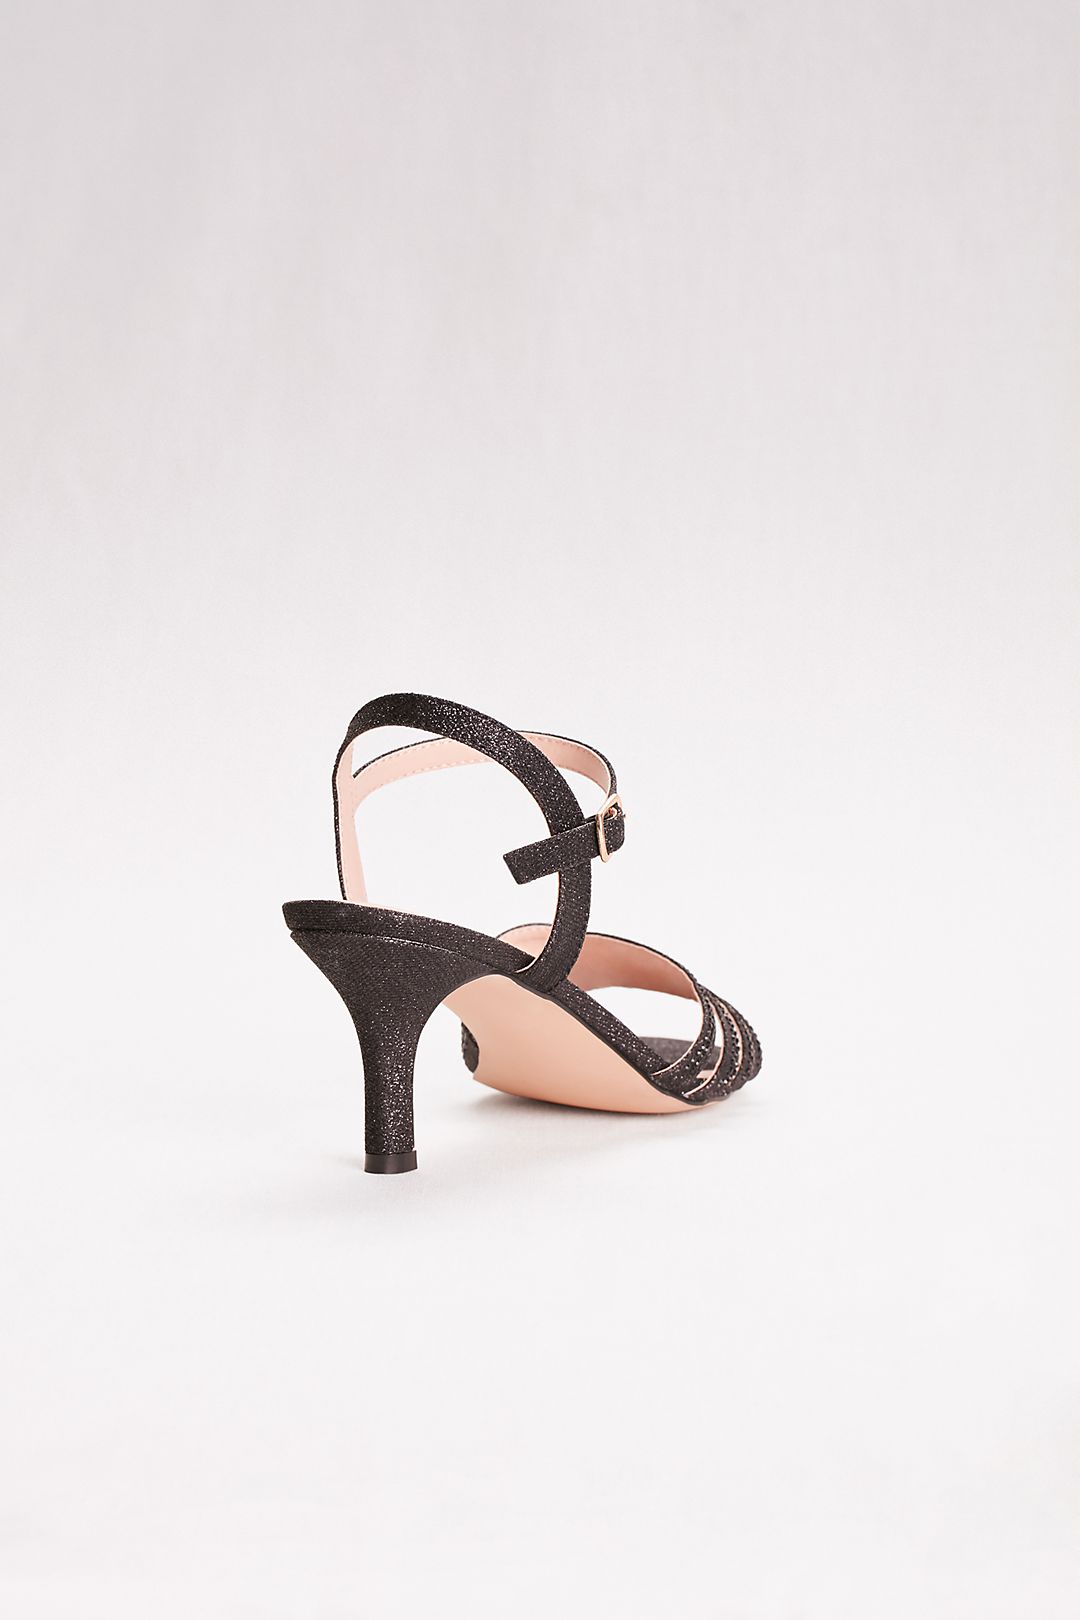 Low Heel Strappy Embellished Sandals Image 4